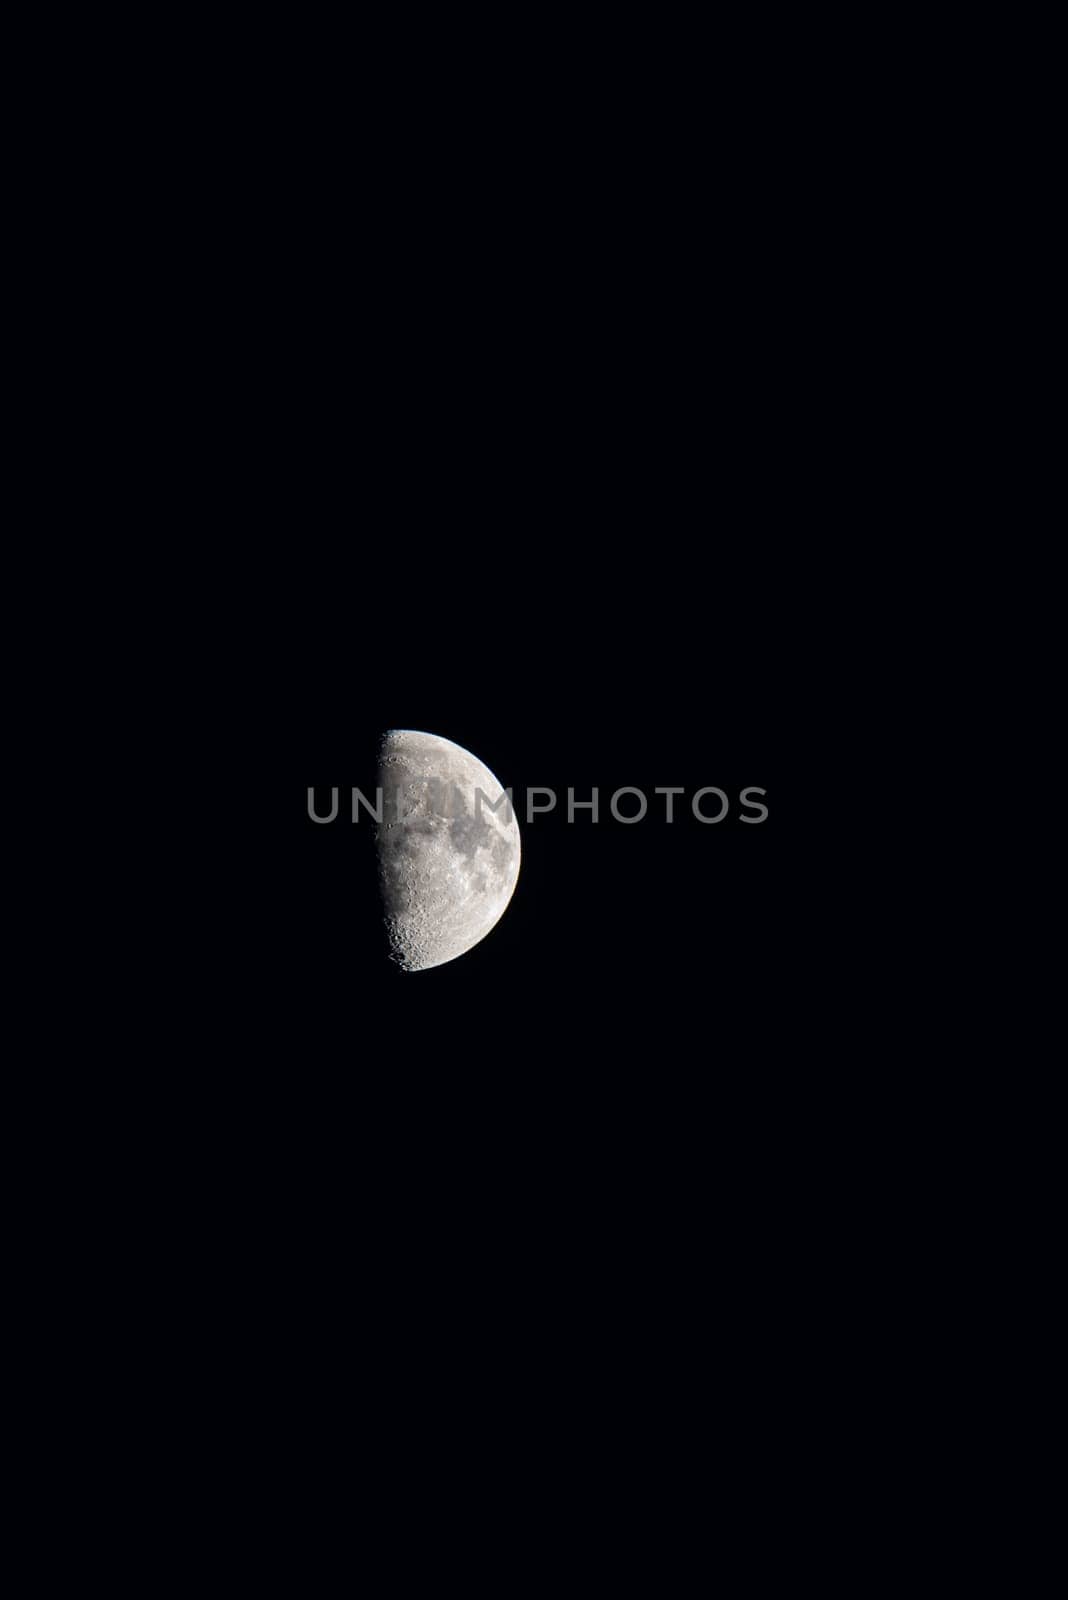 Vertical Tranquility: Waning Moon in Celestial Stillness by raul_ruiz